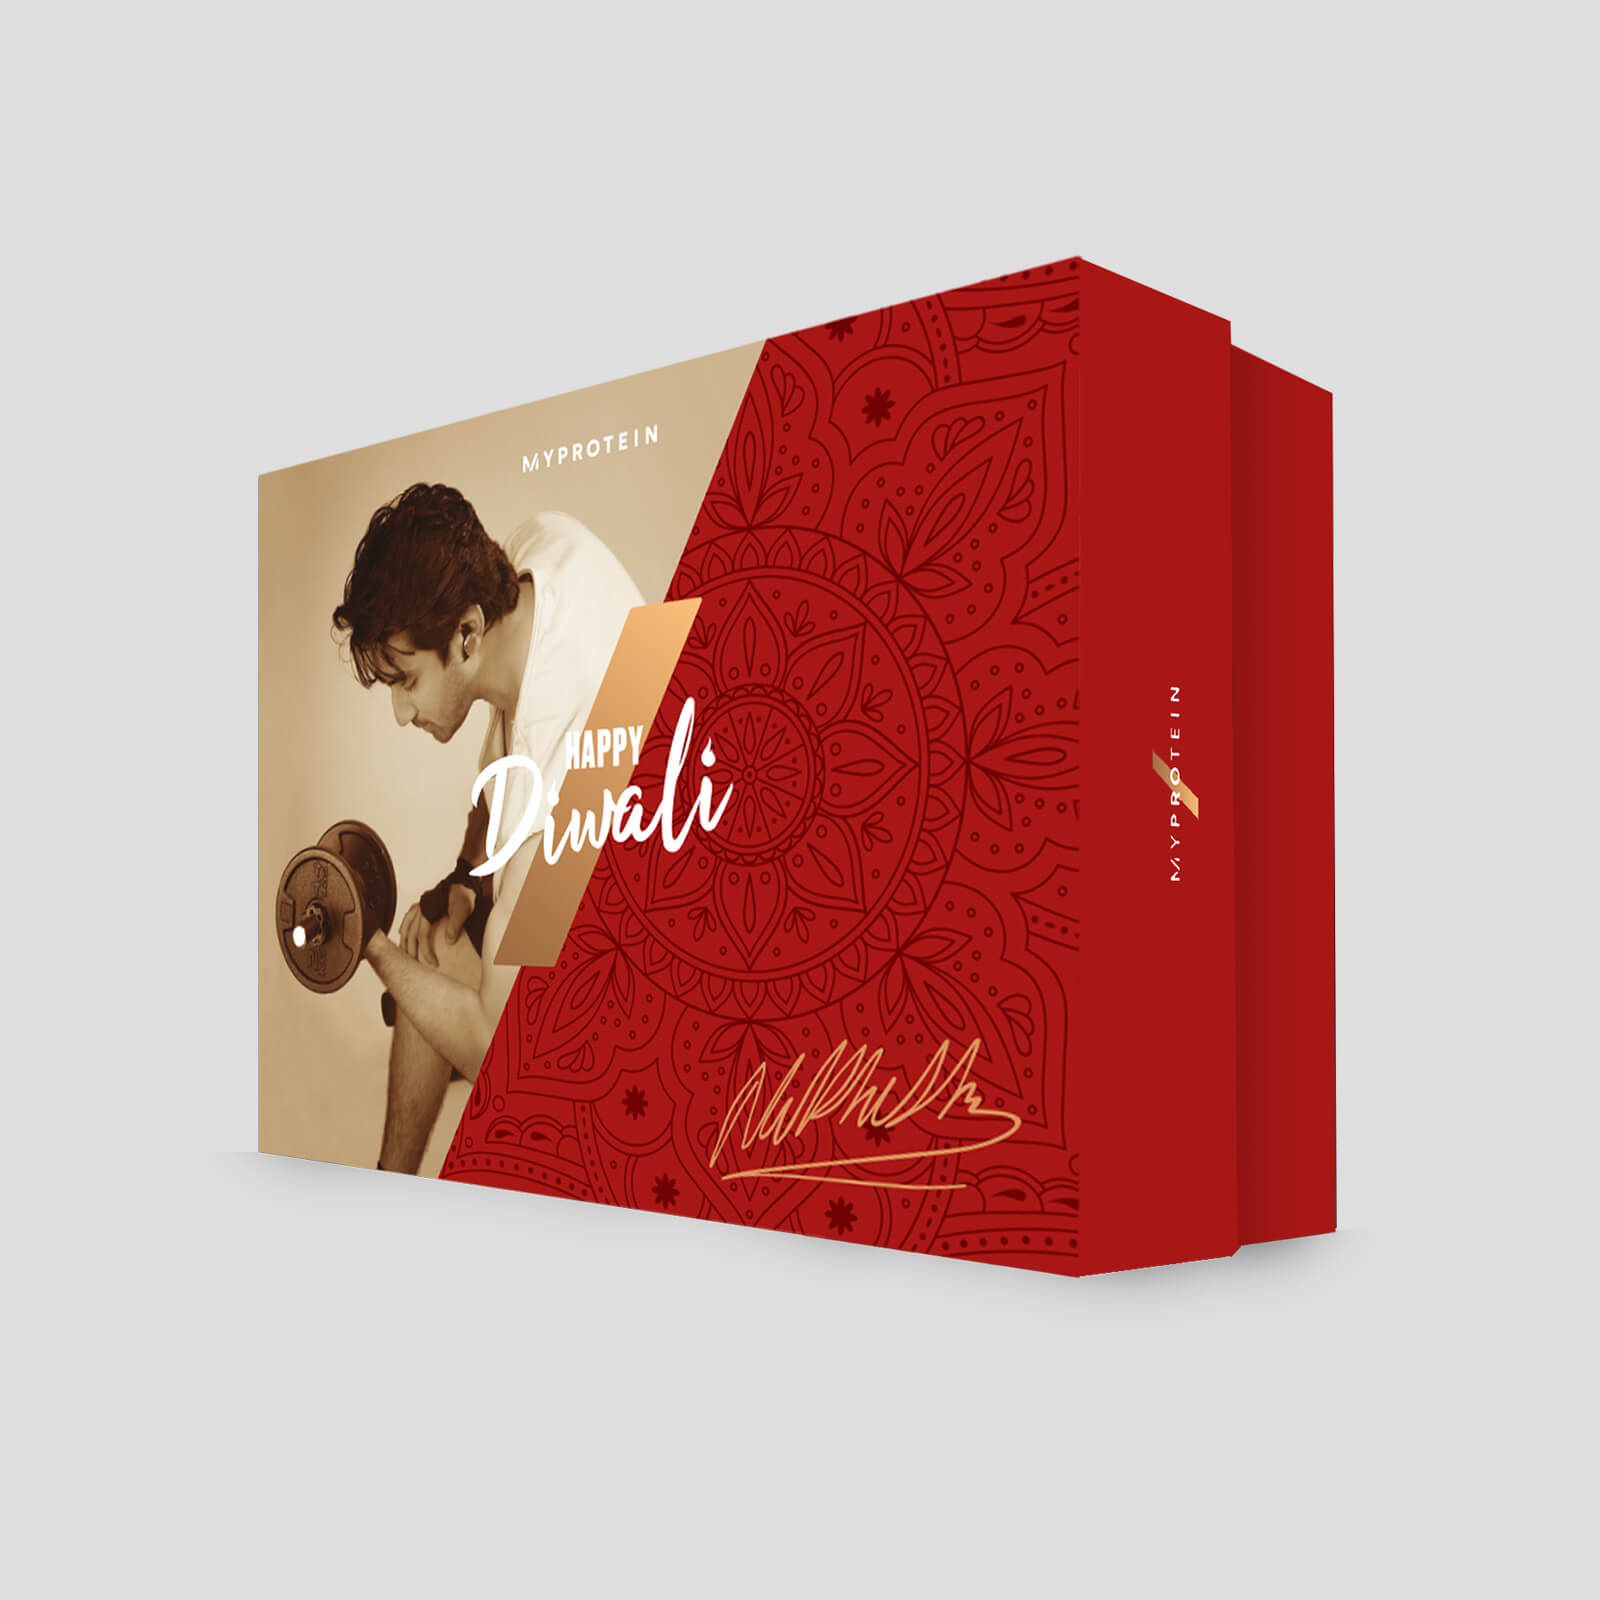 Limited Edition Nikhil Box